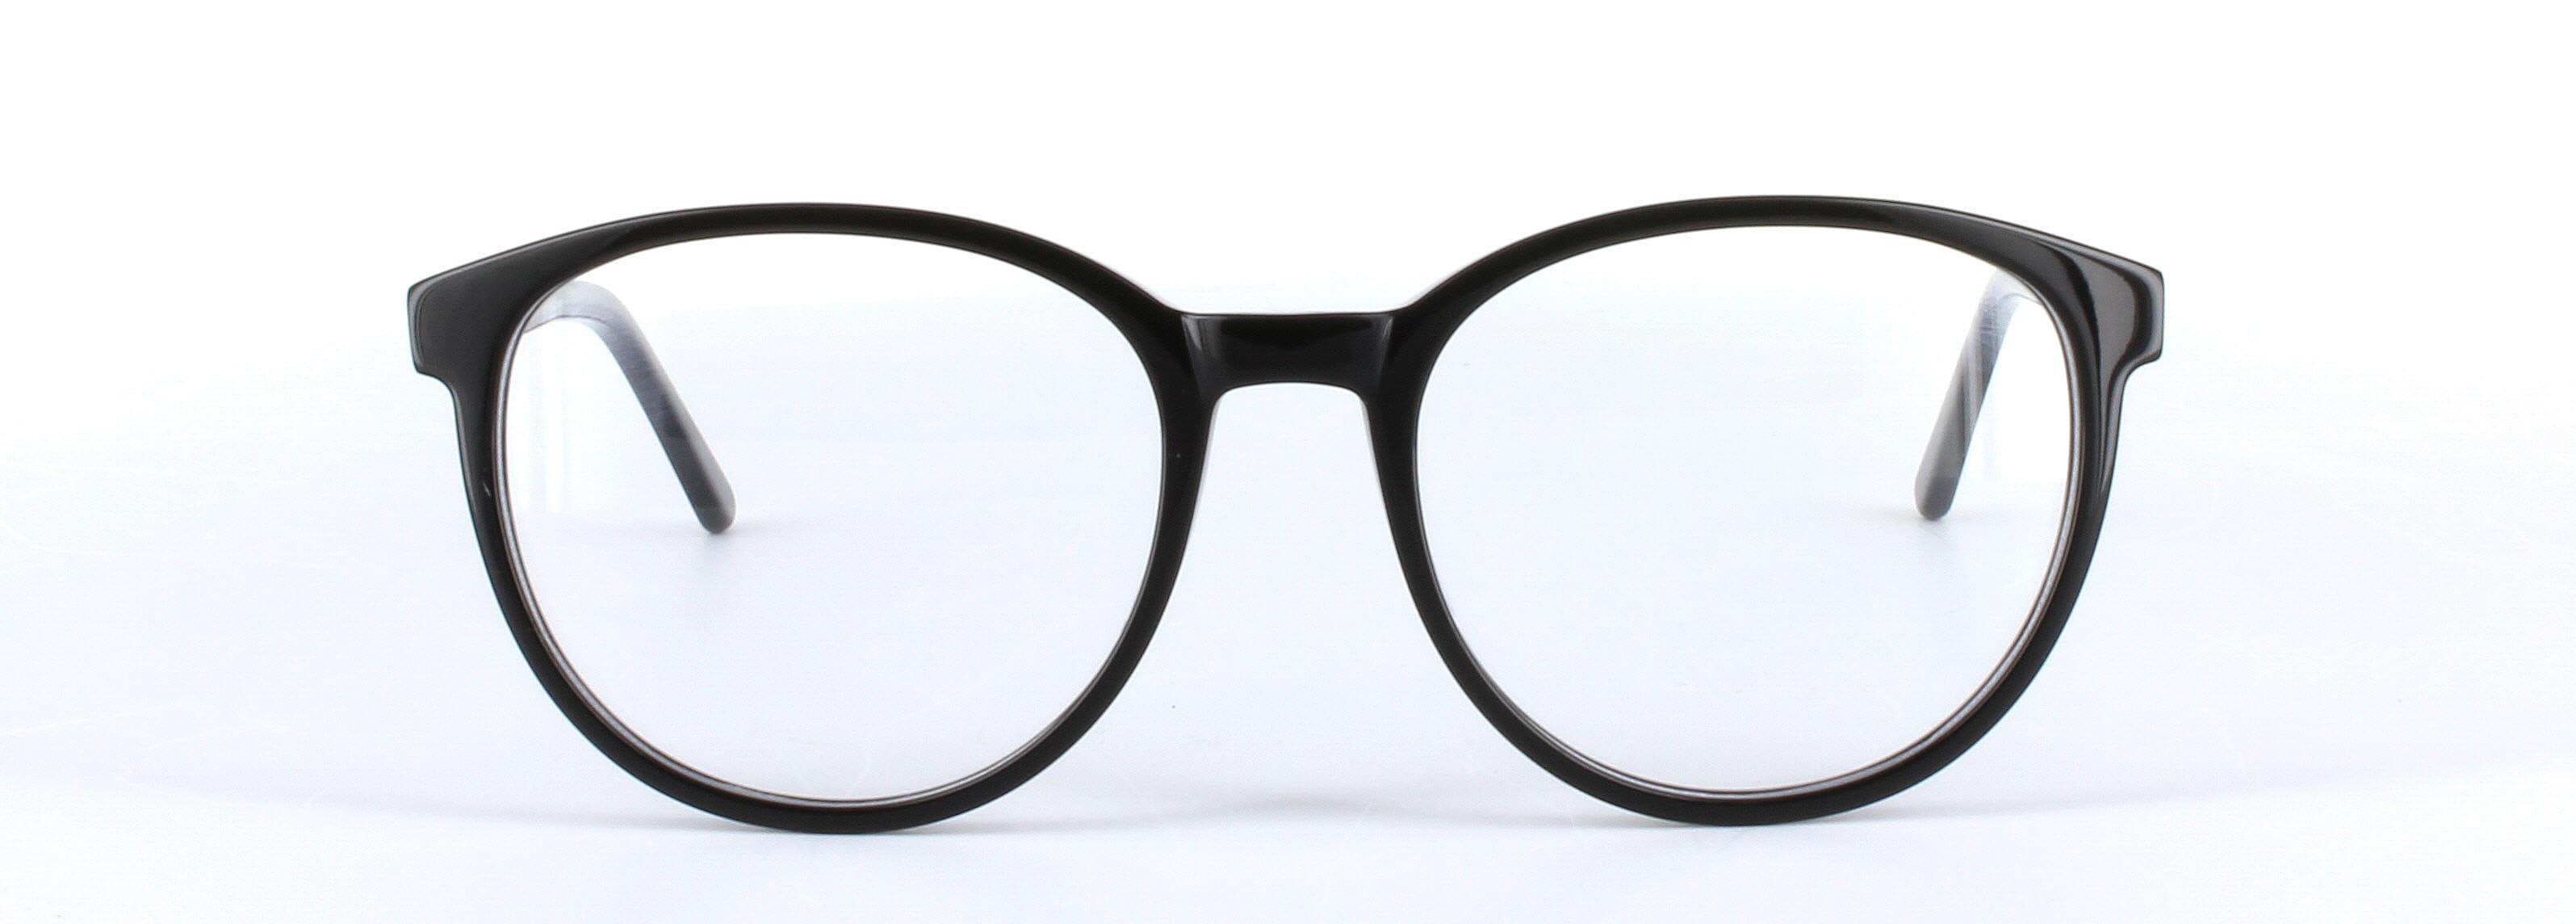 Livia Black Full Rim Round Plastic Glasses - Image View 5